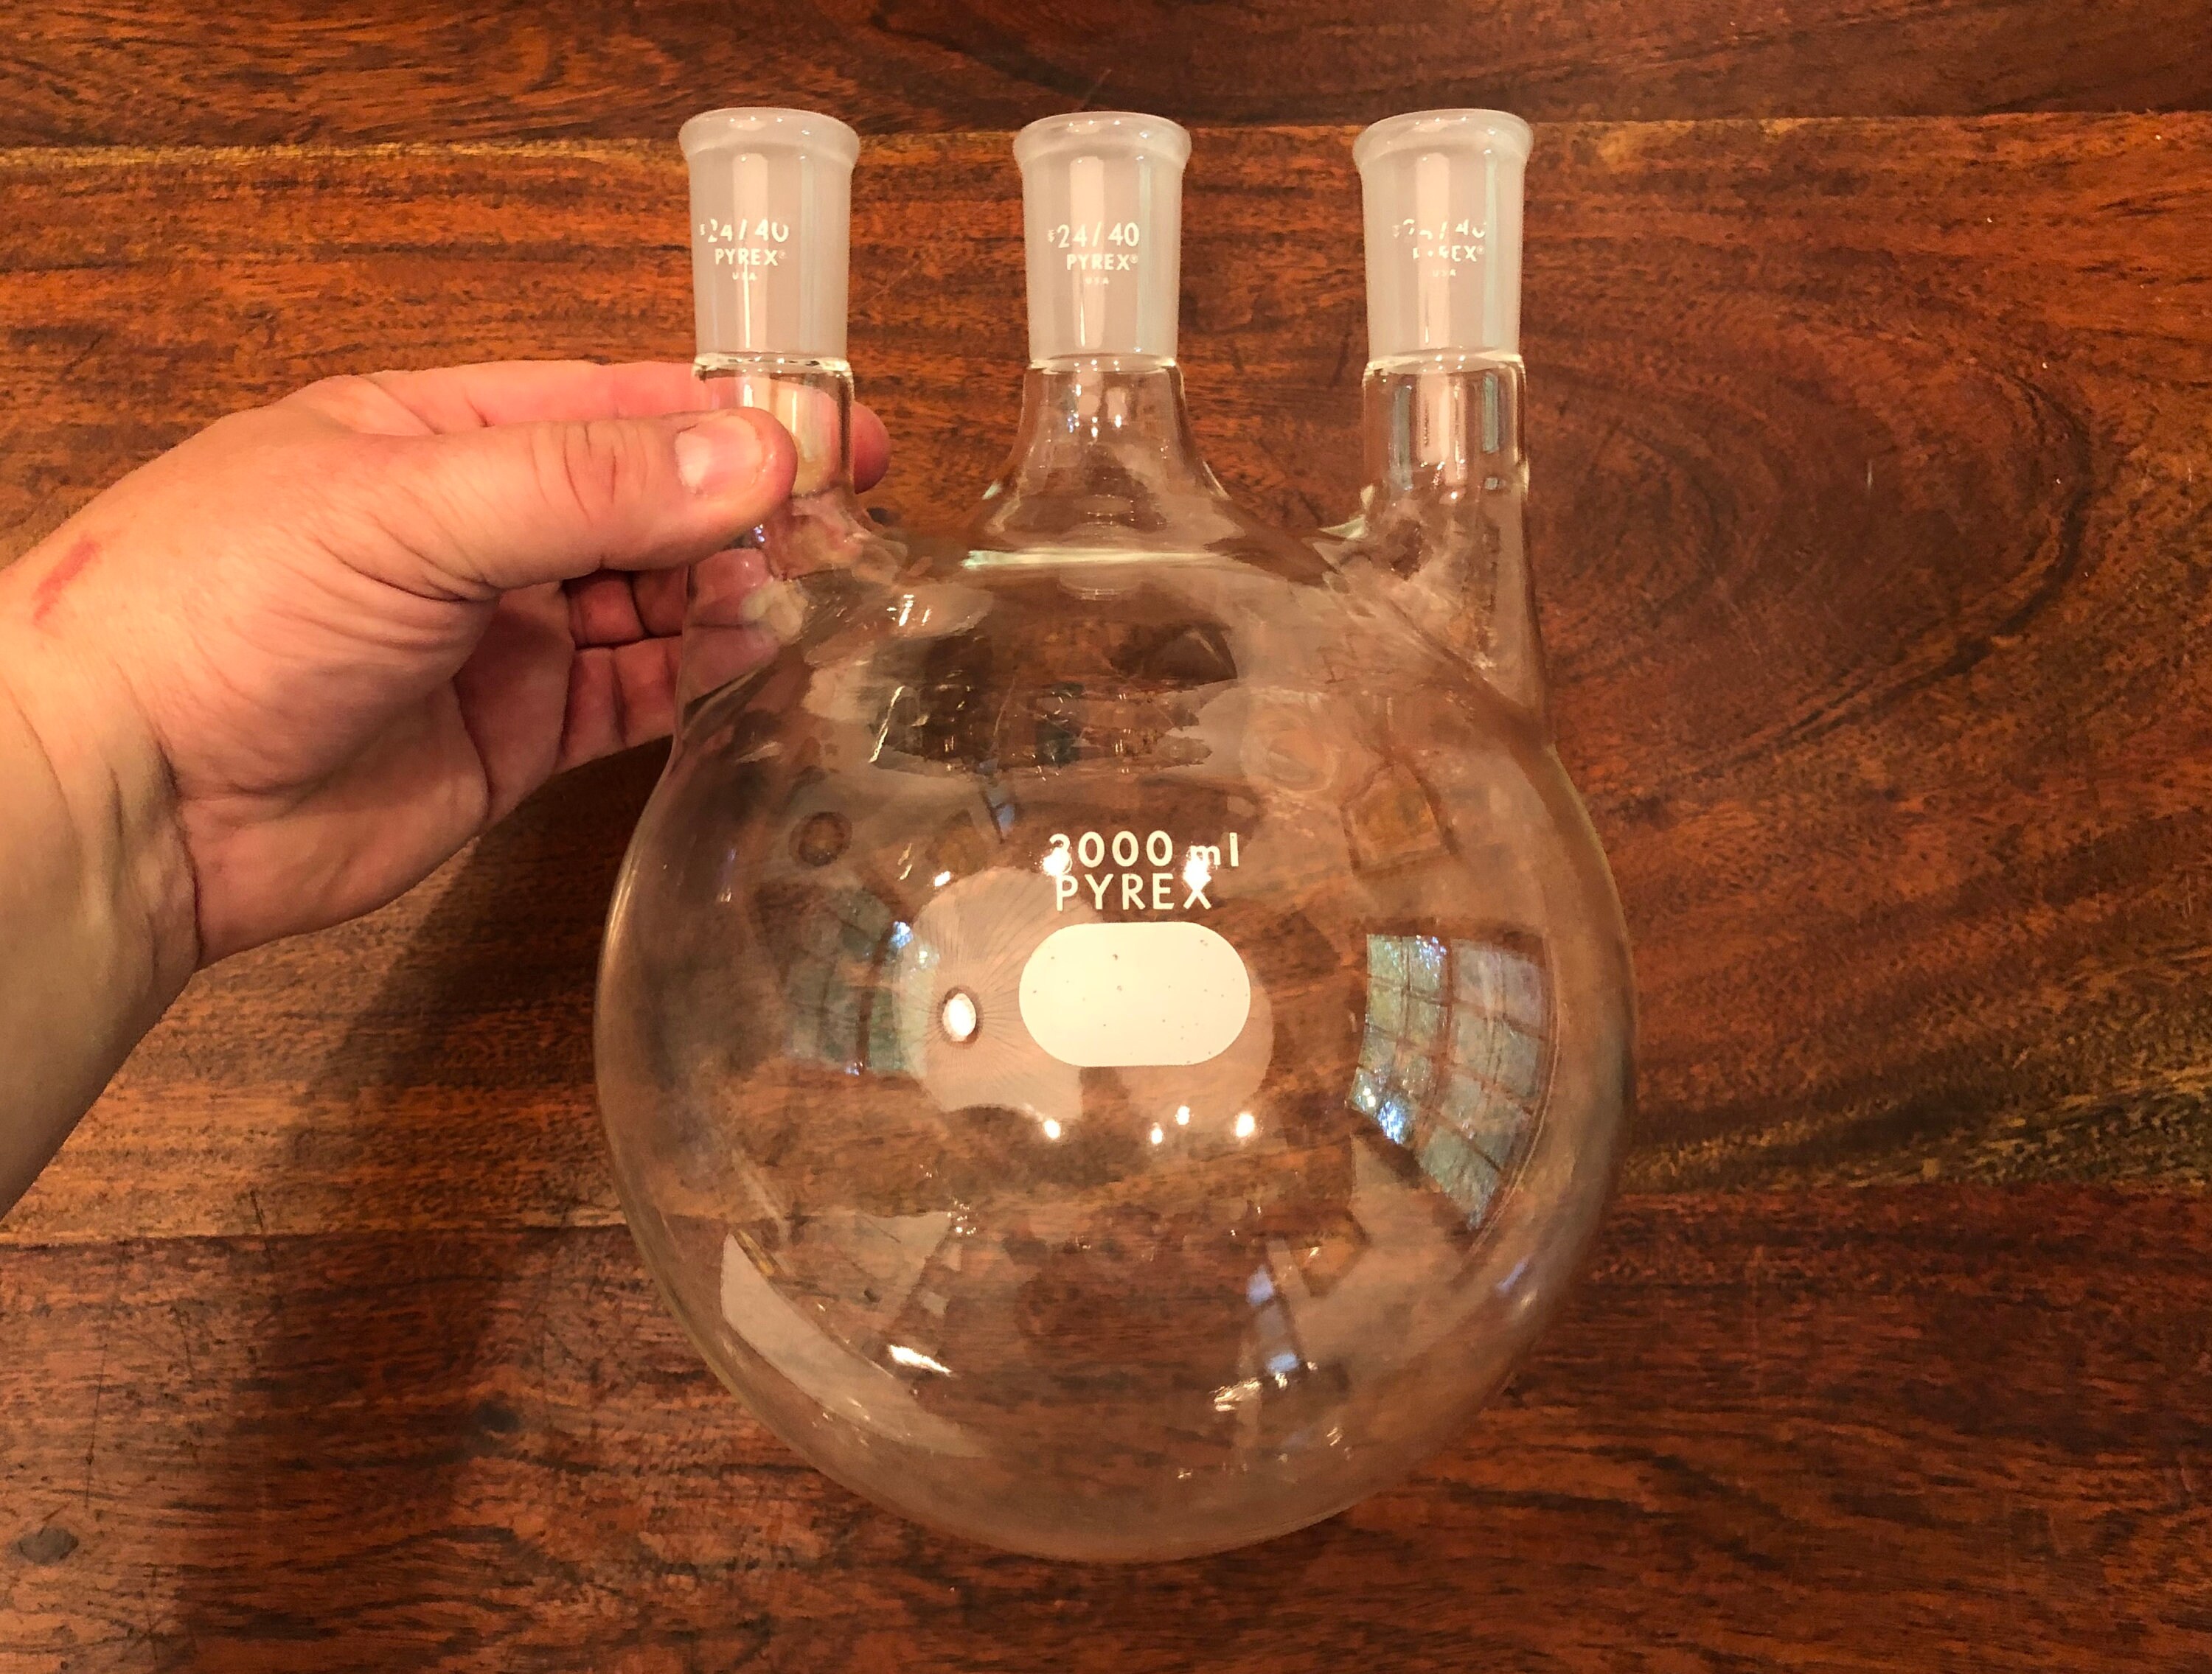 Corning Pyrex Borosilicate Glass Round Bottom Distilling Flask